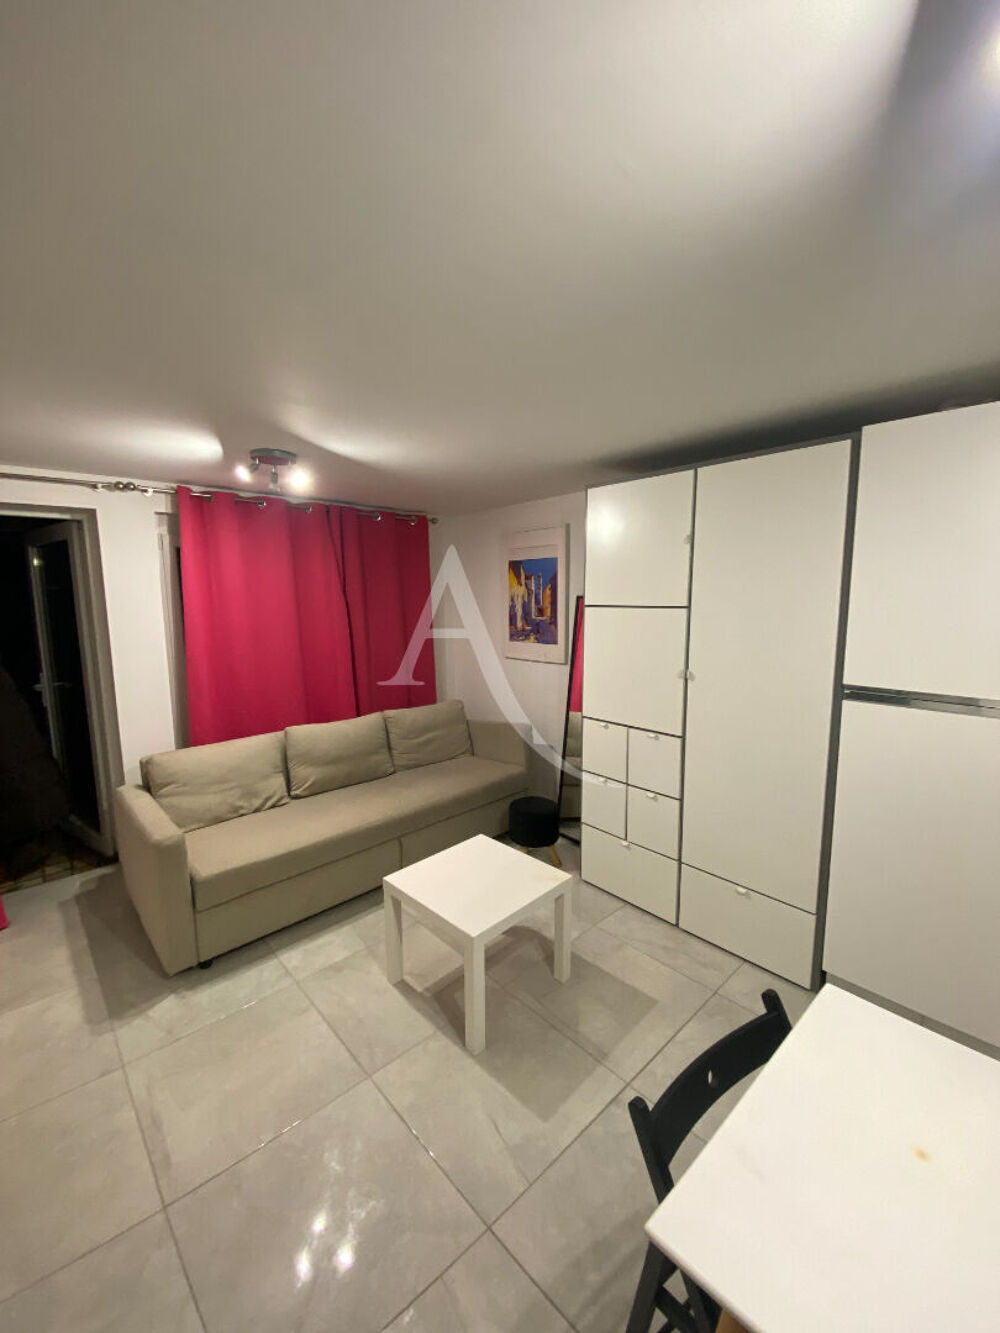 Location Appartement Appartement meubl Le Blanc Mesnil 1 pice(s) 24.62 m2 Le blanc mesnil